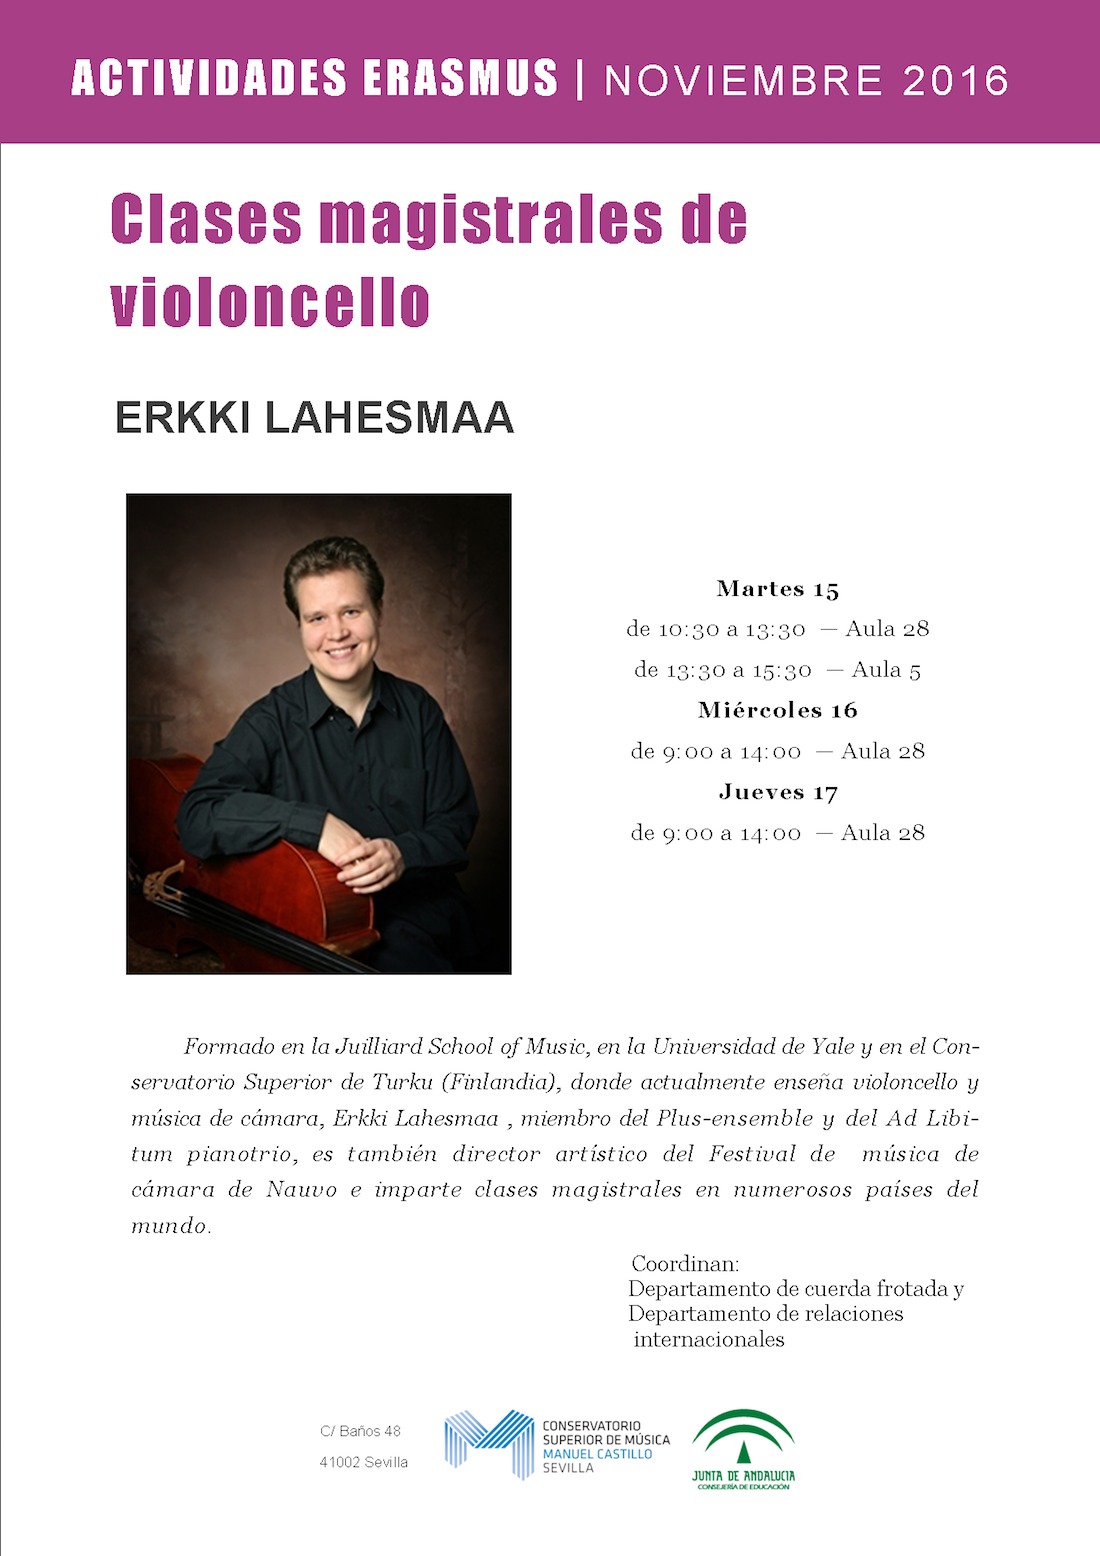 Clases magistrales de violoncello – Erkki Lahesmaa